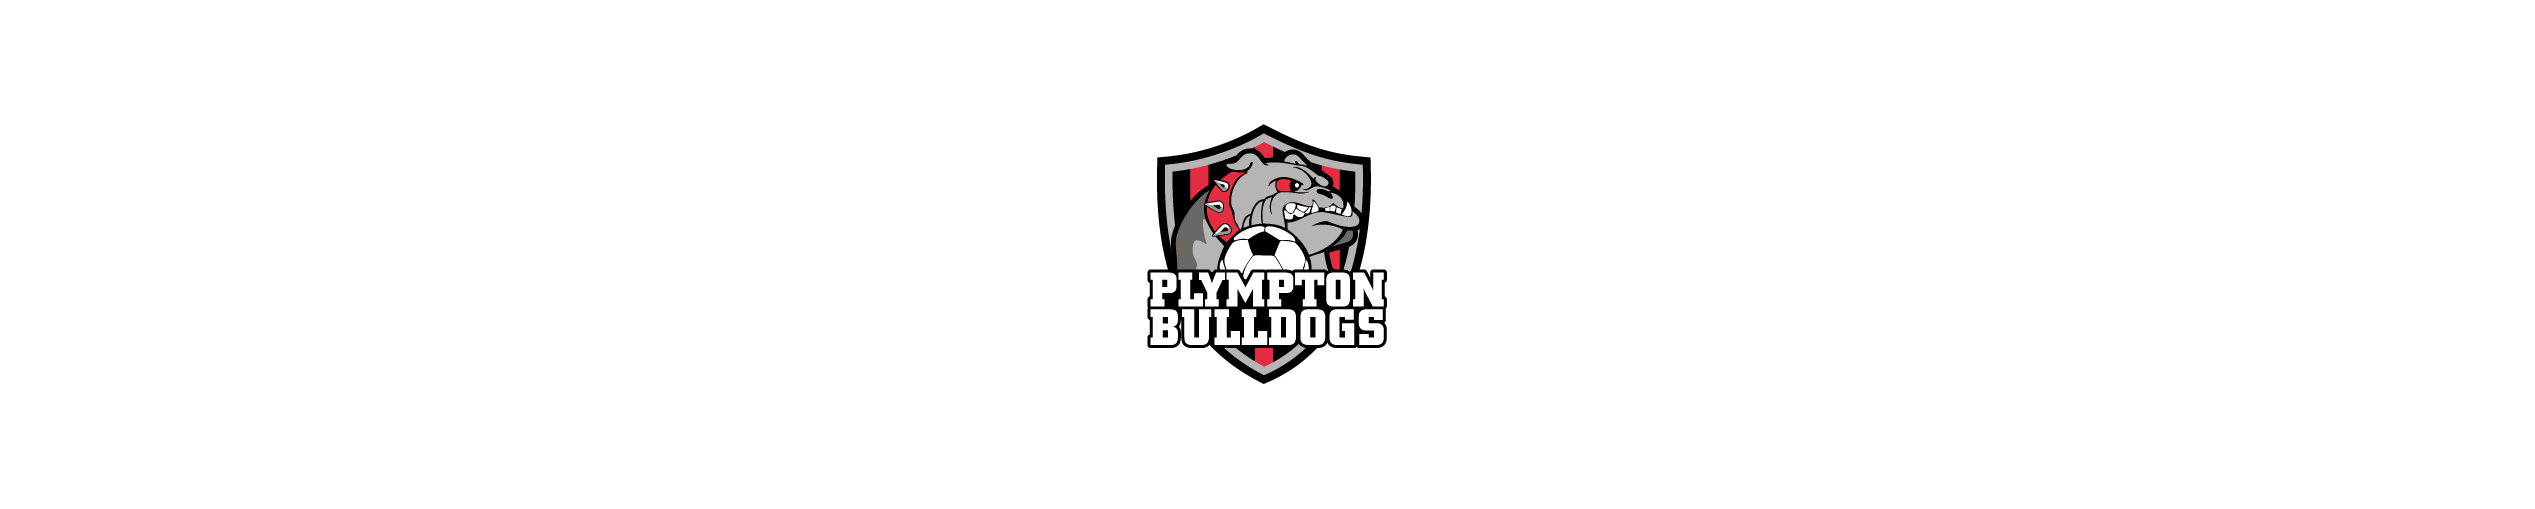 Plympton Bulldogs